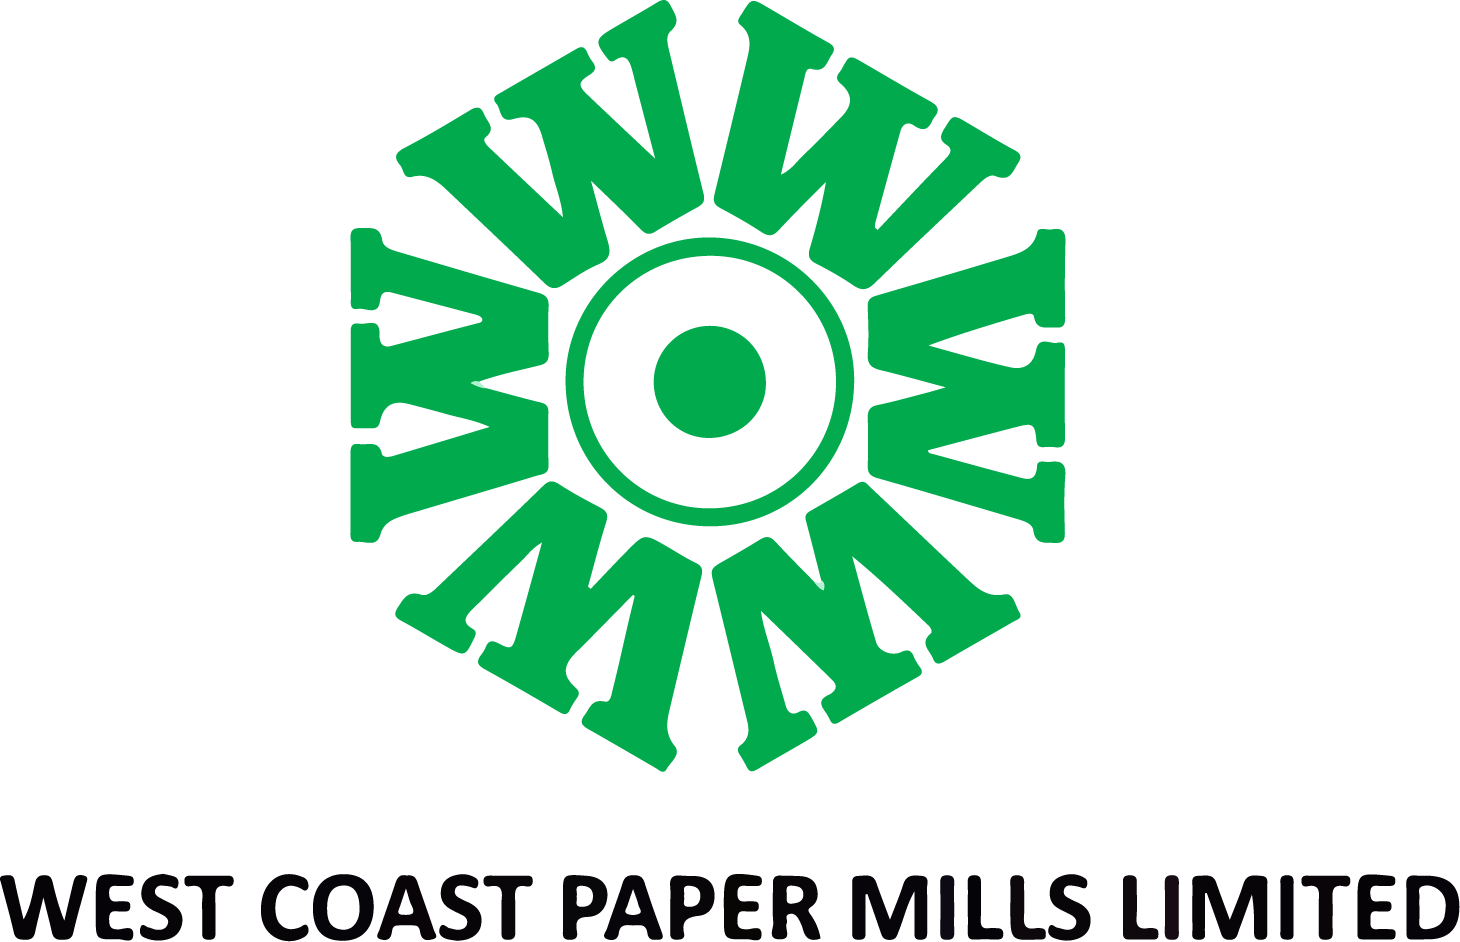 West Coast Paper Mills logo large (transparent PNG)